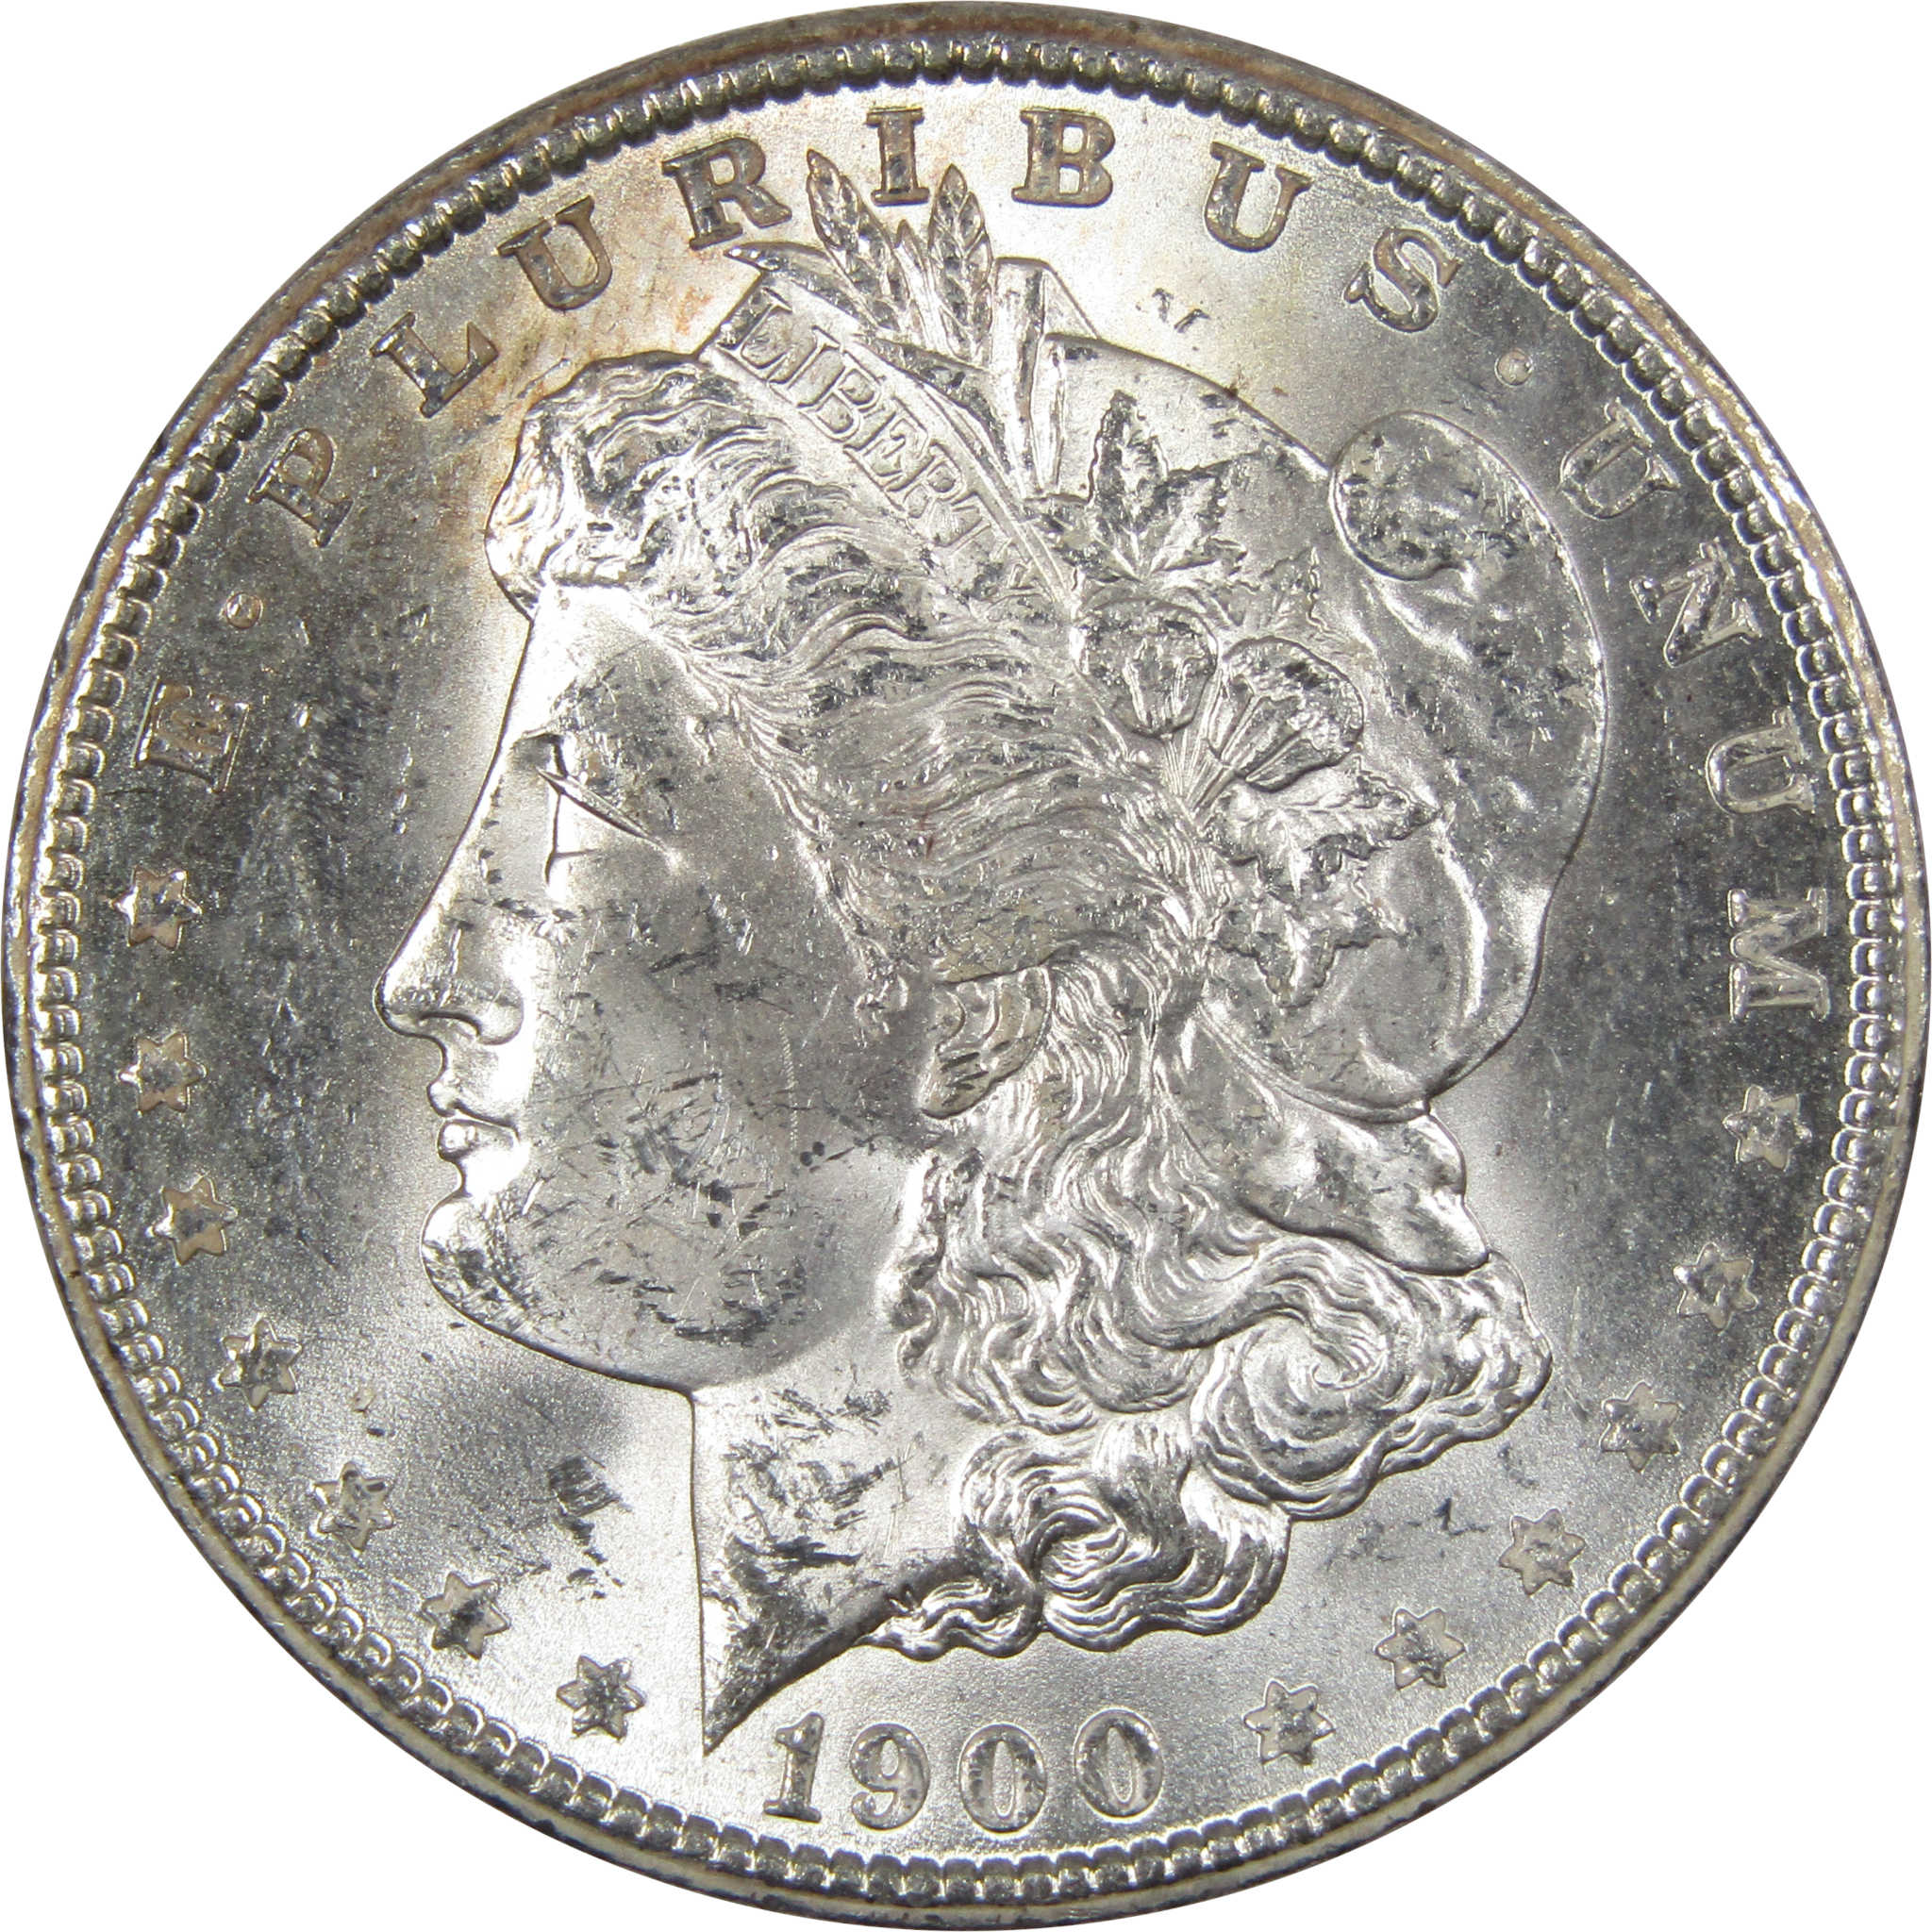 1900 O Morgan Dollar BU Uncirculated Mint State 90% Silver SKU:IPC9763 - Morgan coin - Morgan silver dollar - Morgan silver dollar for sale - Profile Coins &amp; Collectibles